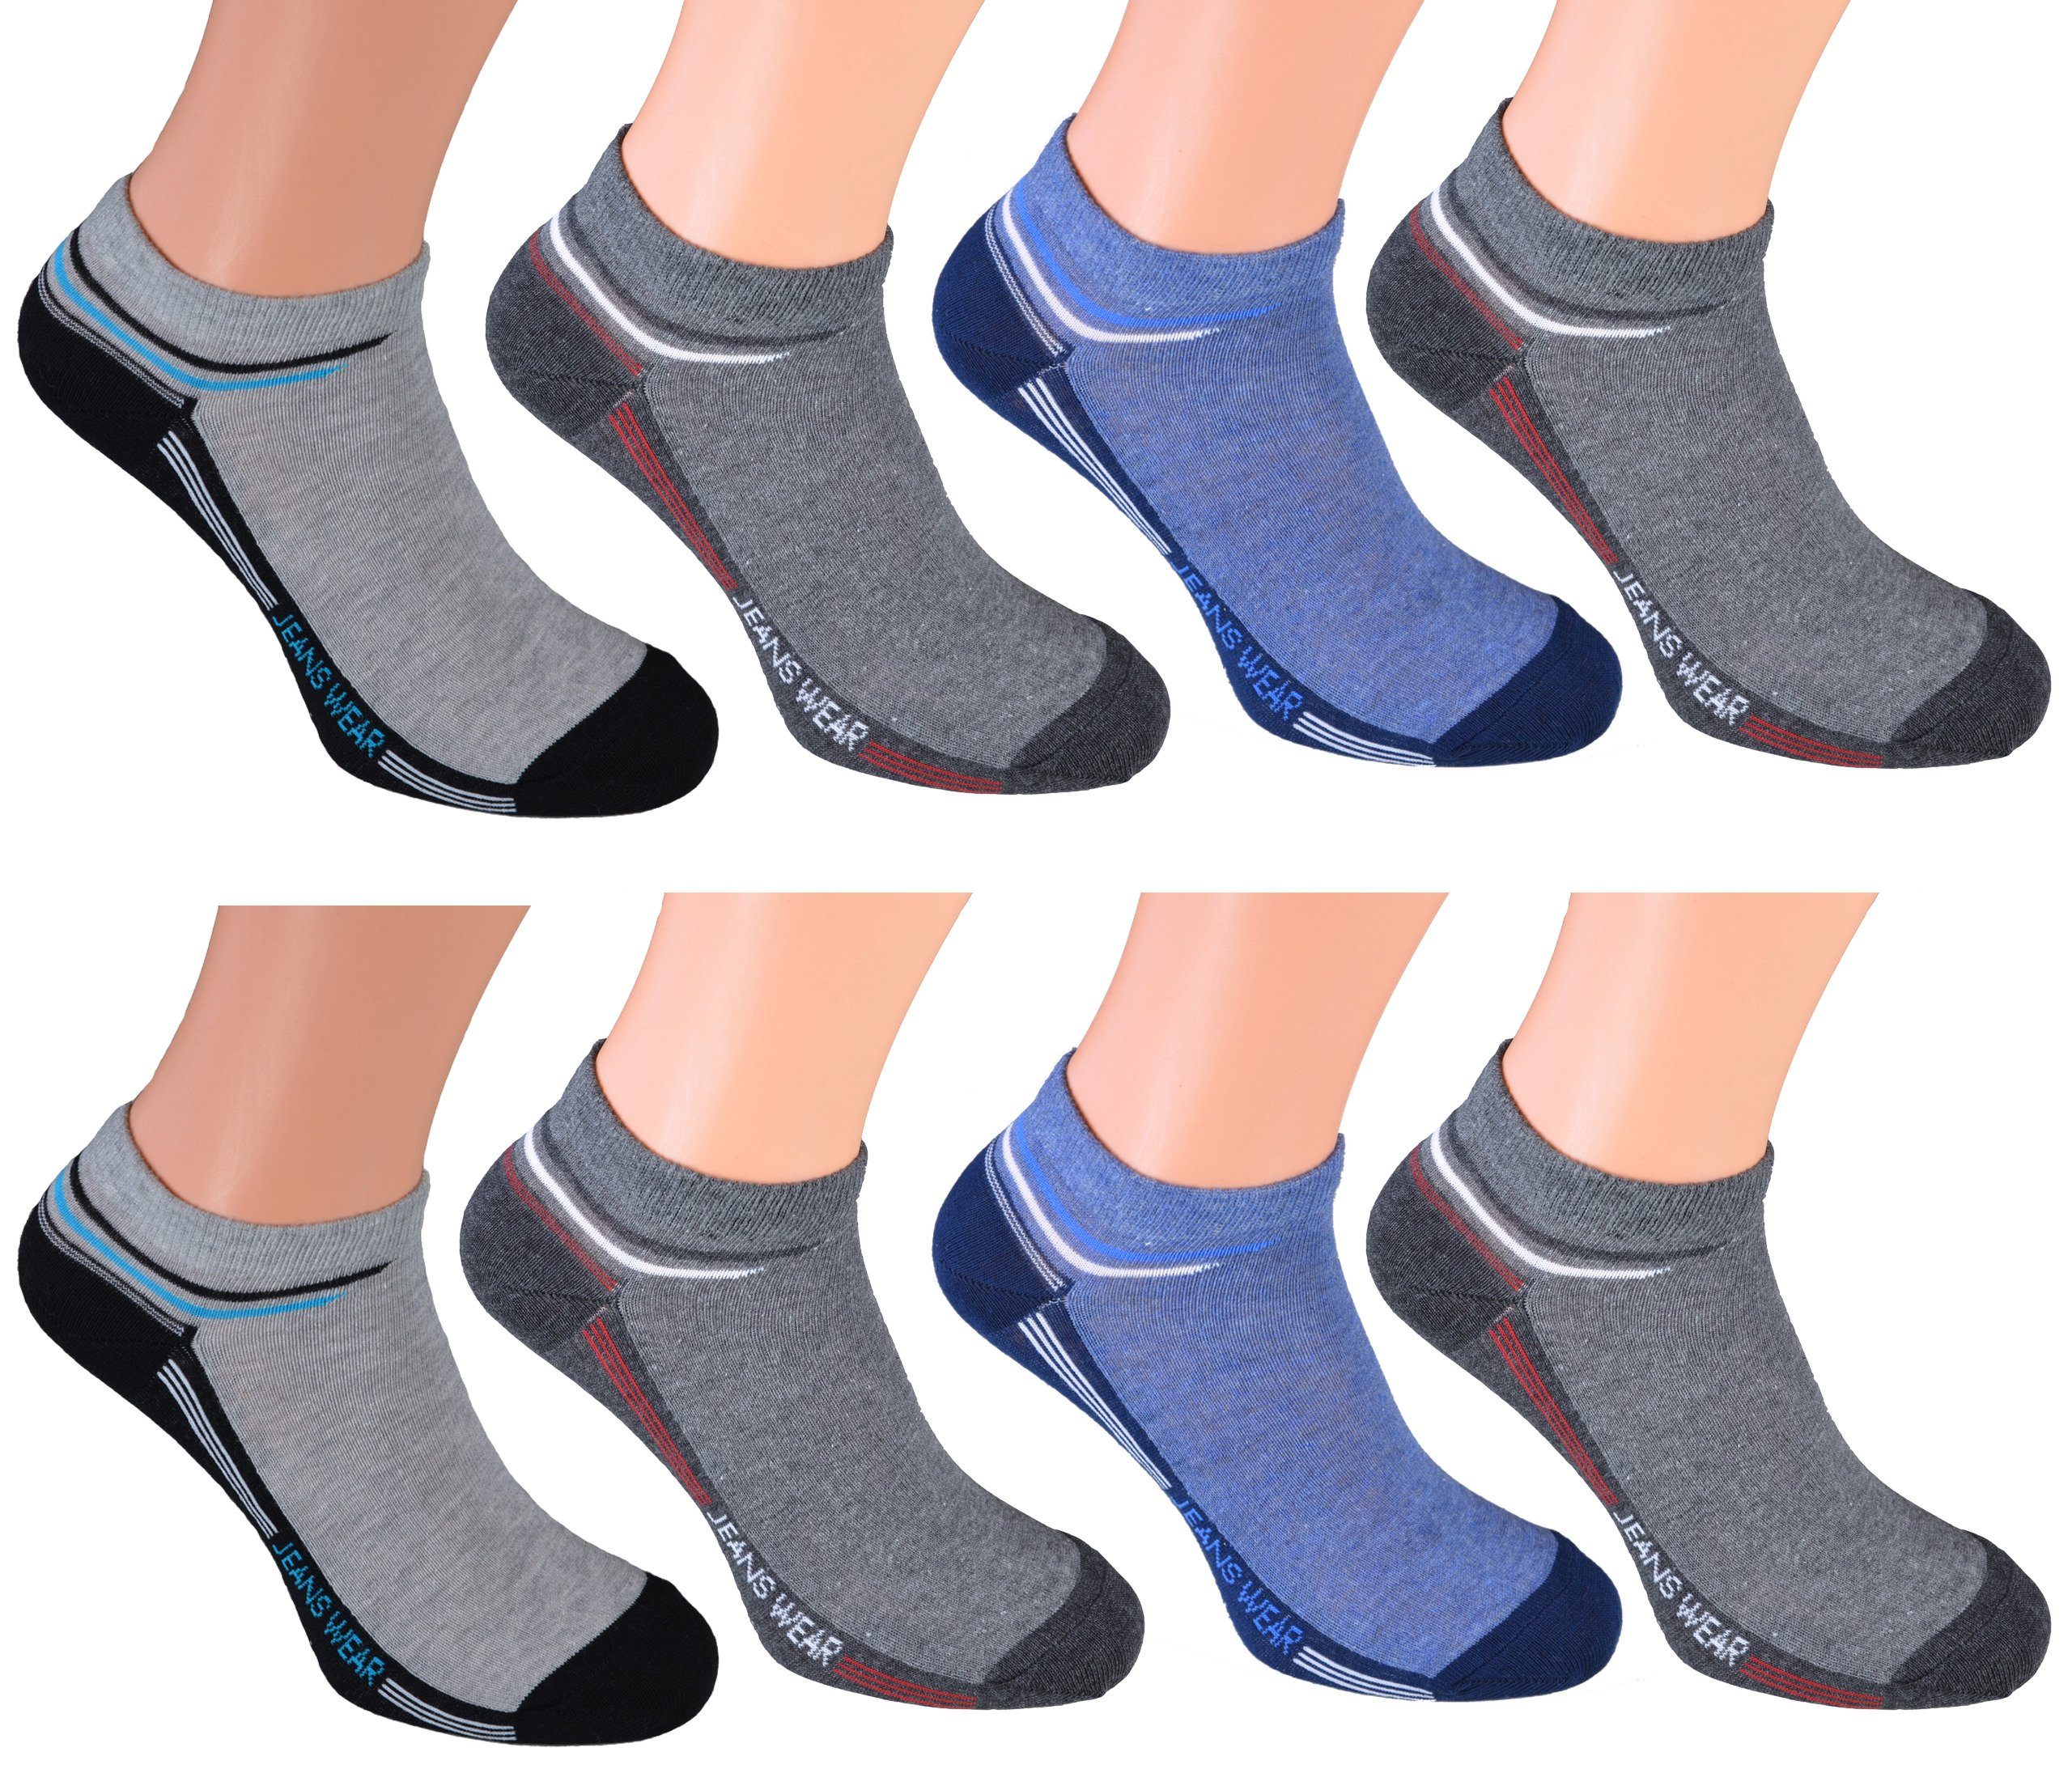 Jeans Sneakersocken für Socken Füsslinge - Modelle Baumwolle Cocain underwear Söckchen verschiedene Sneaker Paar Herren (8-Paar) 8